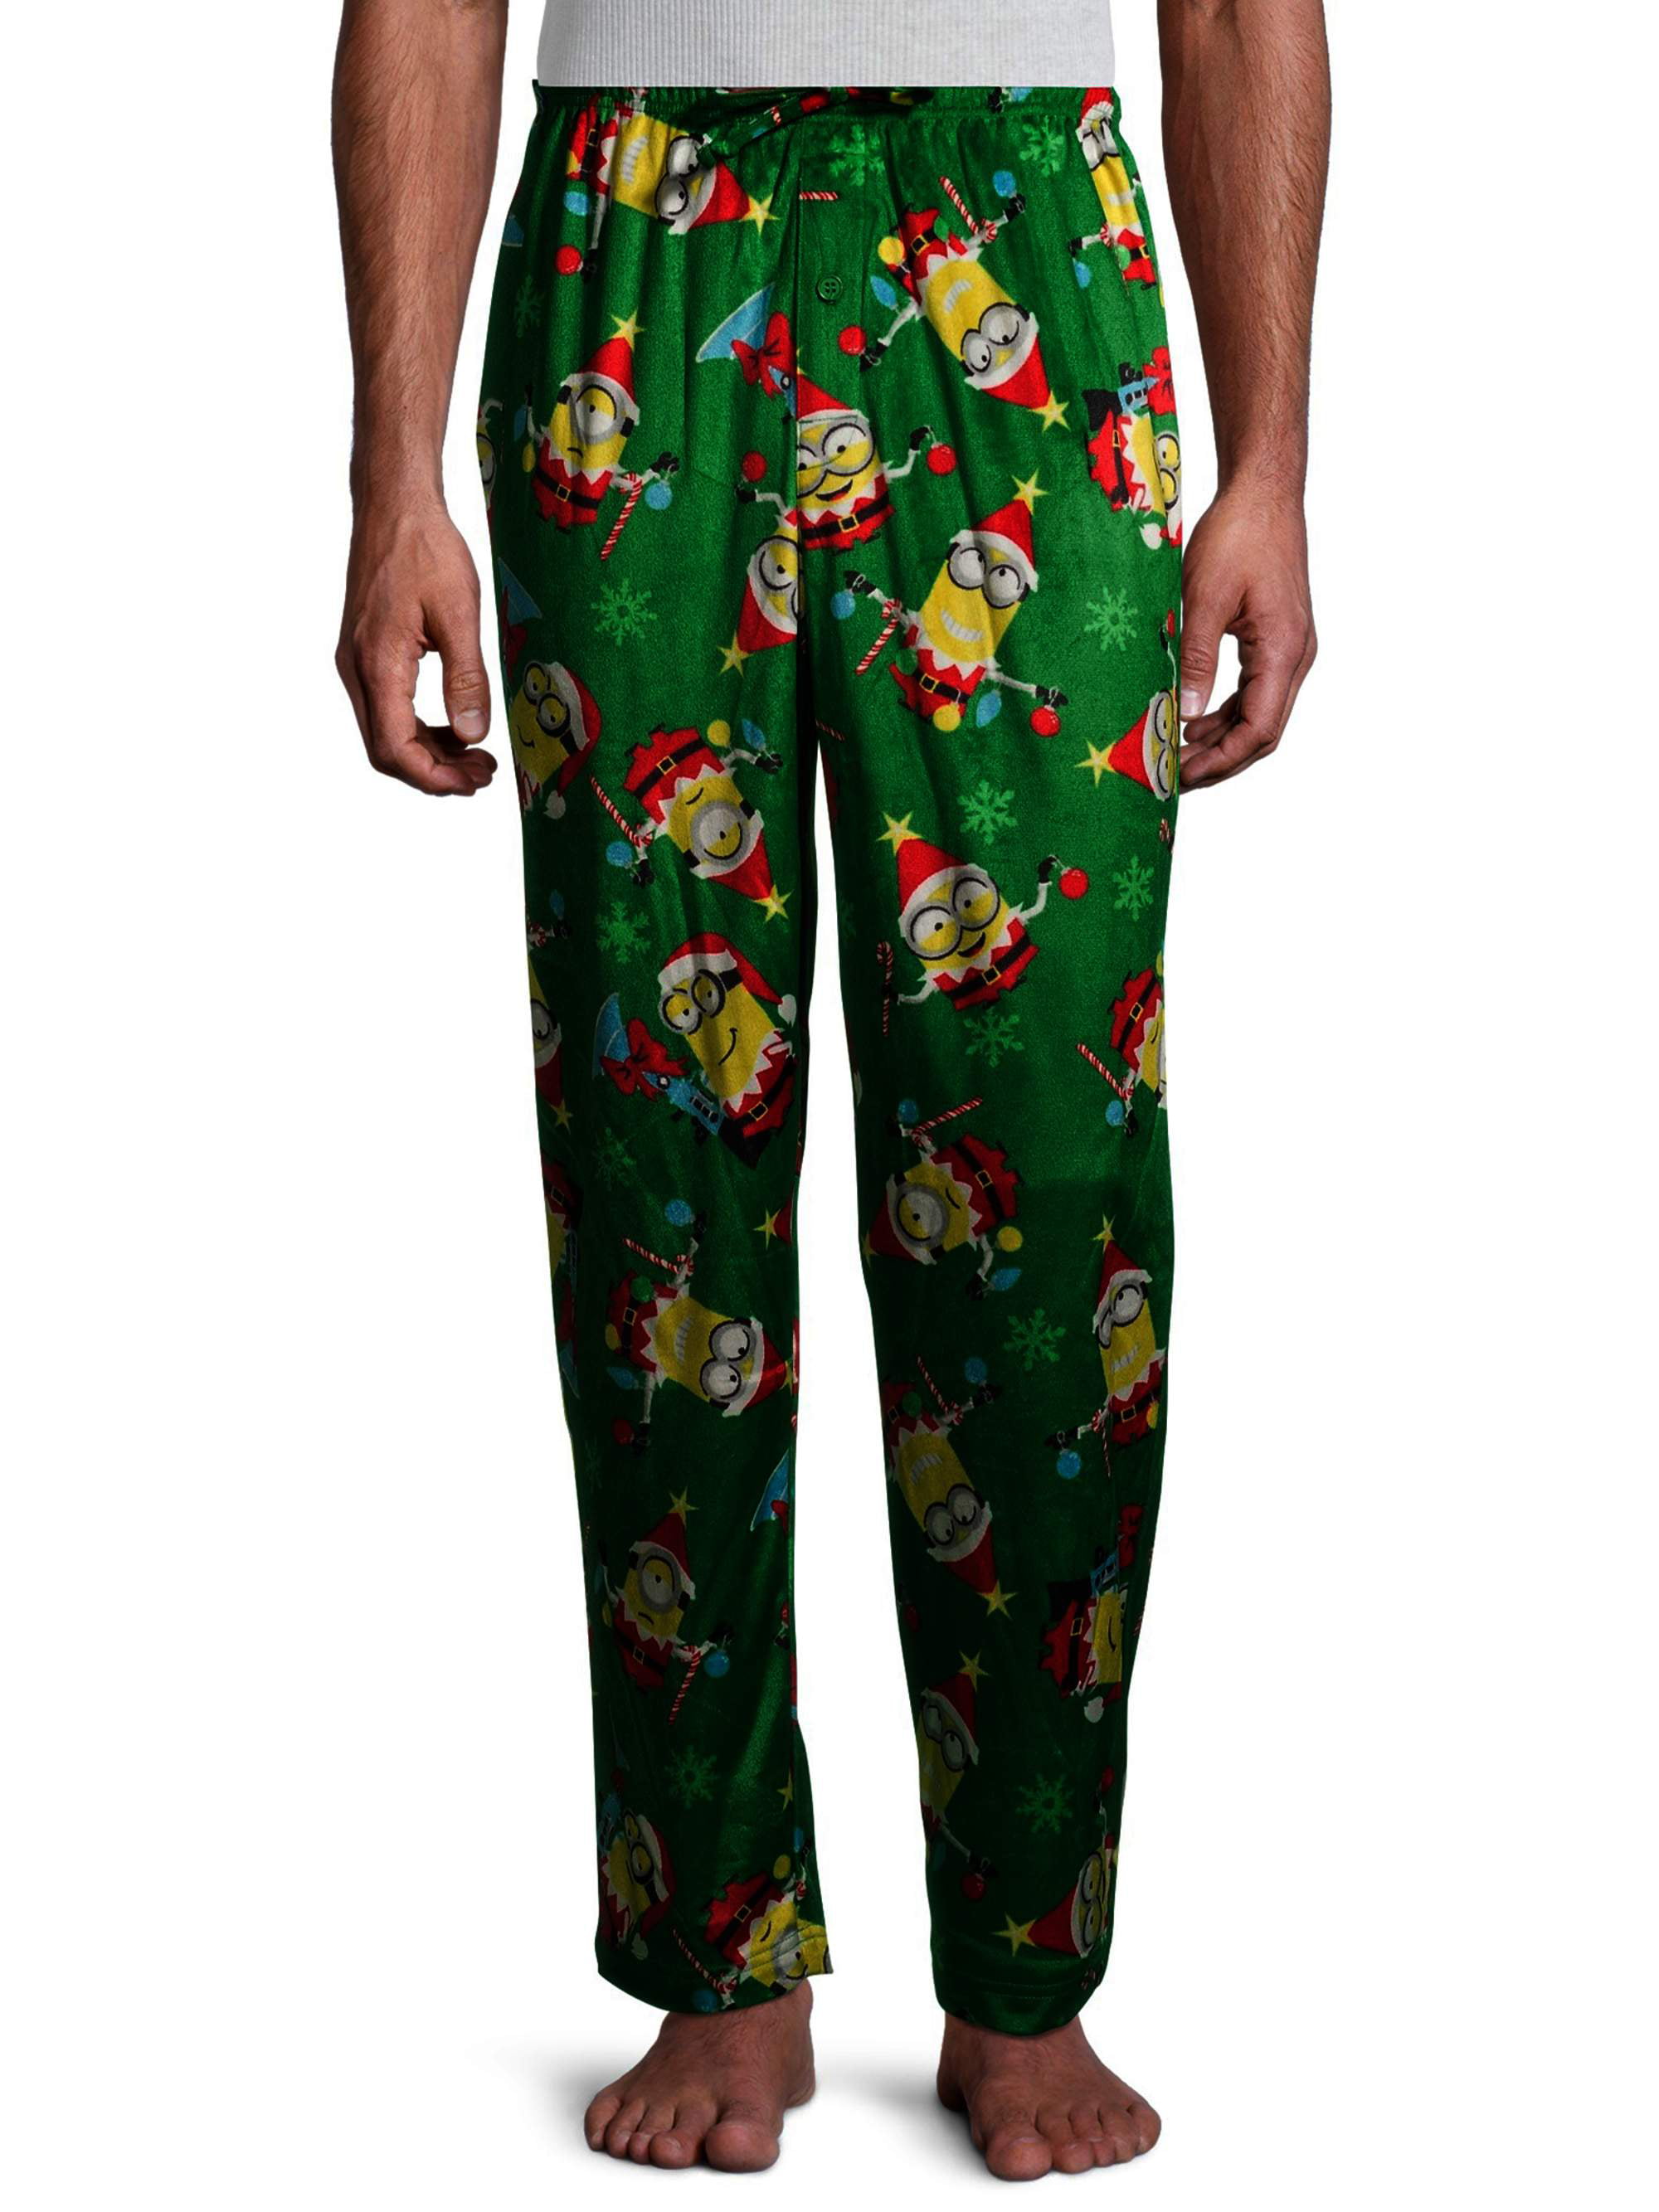 Minions Men's Christmas Pajama Pants - Walmart.com